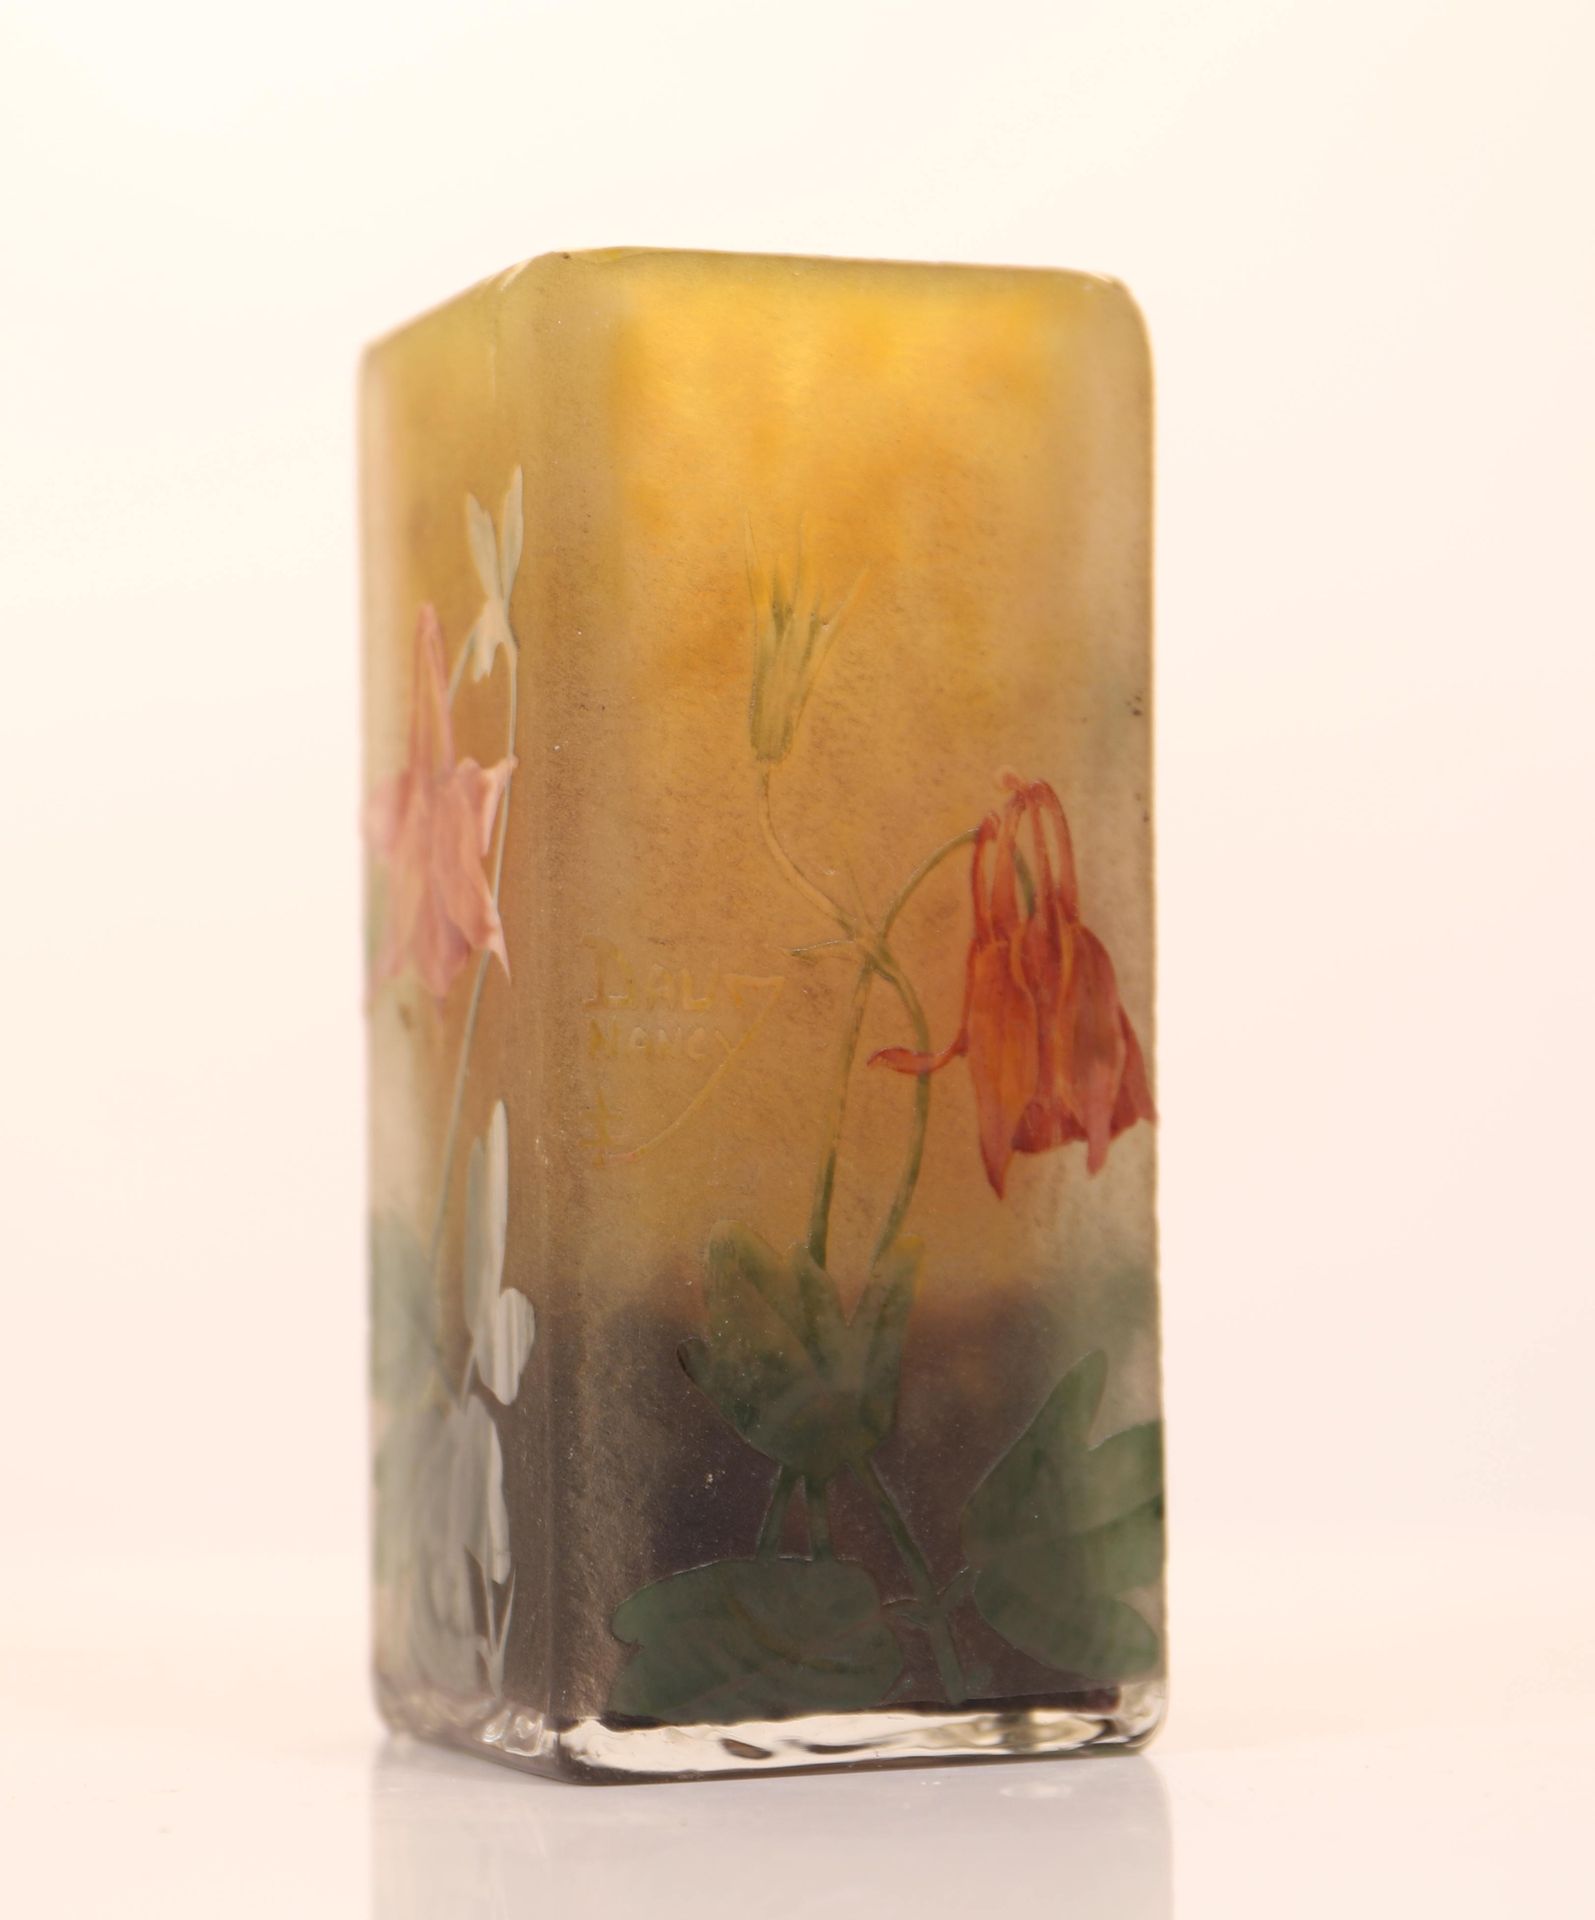 Null 道姆的方形花瓶

小花瓶，在黄色和磨砂的背景上有雕刻和珐琅的花朵。

签名：Daum Nancy

20世纪

尺寸：高：12；深：5厘米